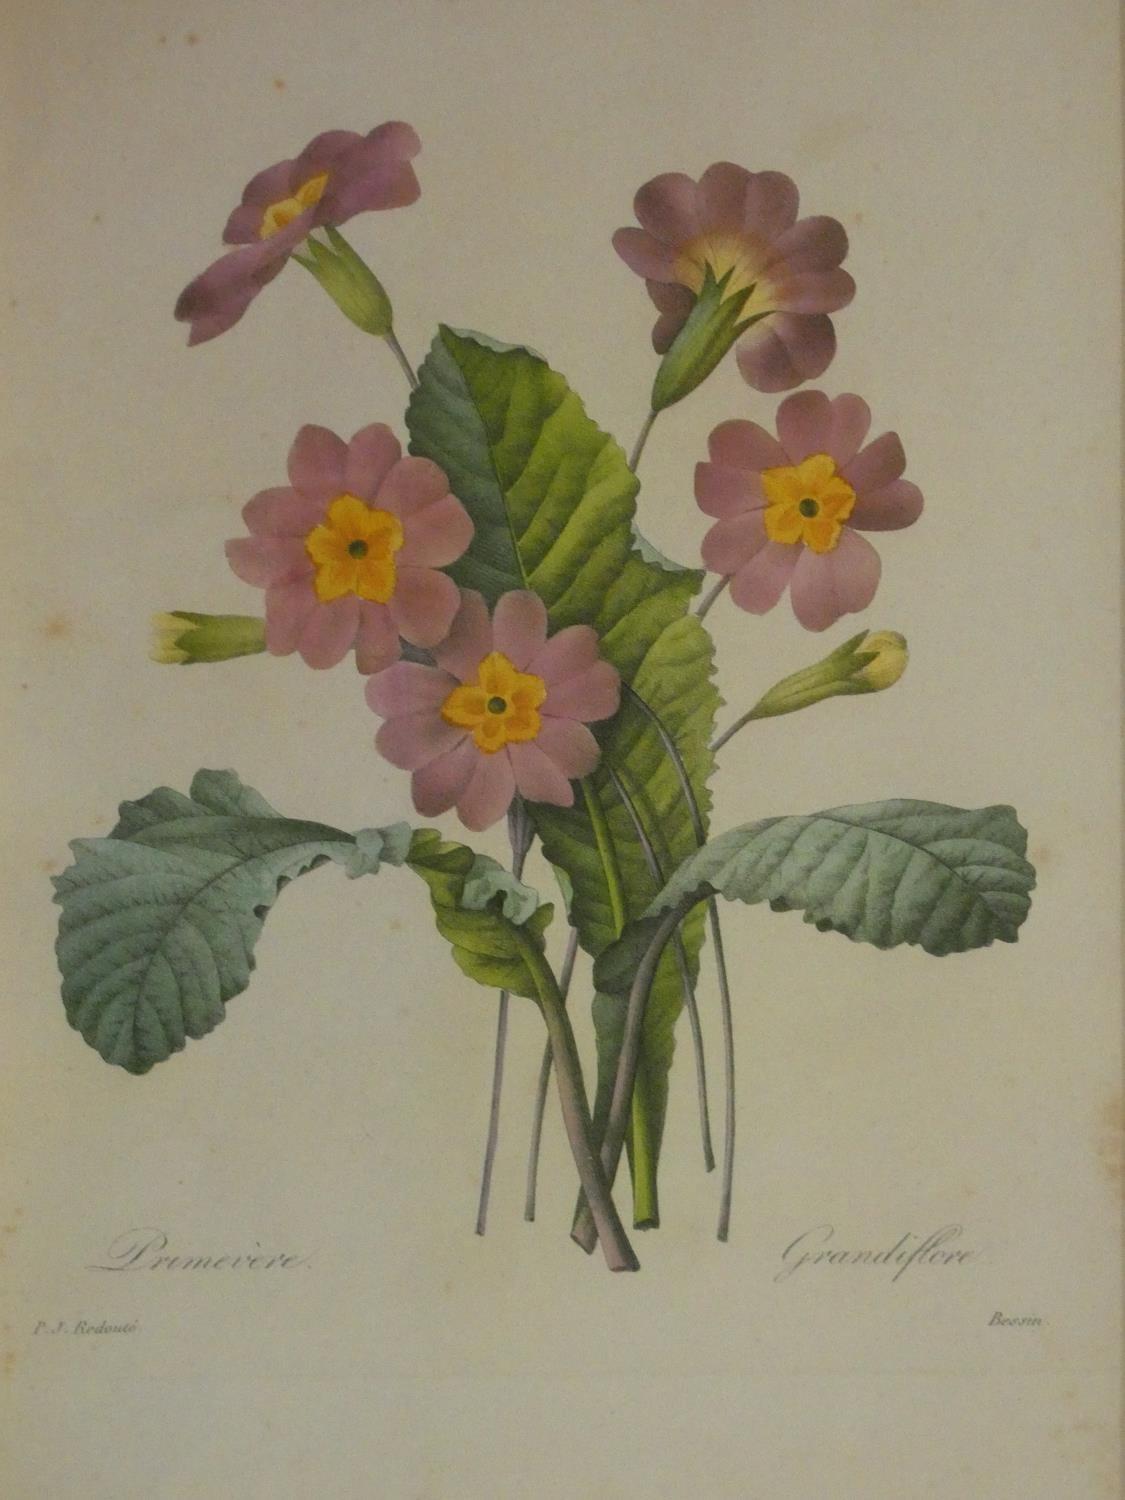 Two framed and glazed vintage botanical prints, each with four floral book plate illustration prints - Image 8 of 11